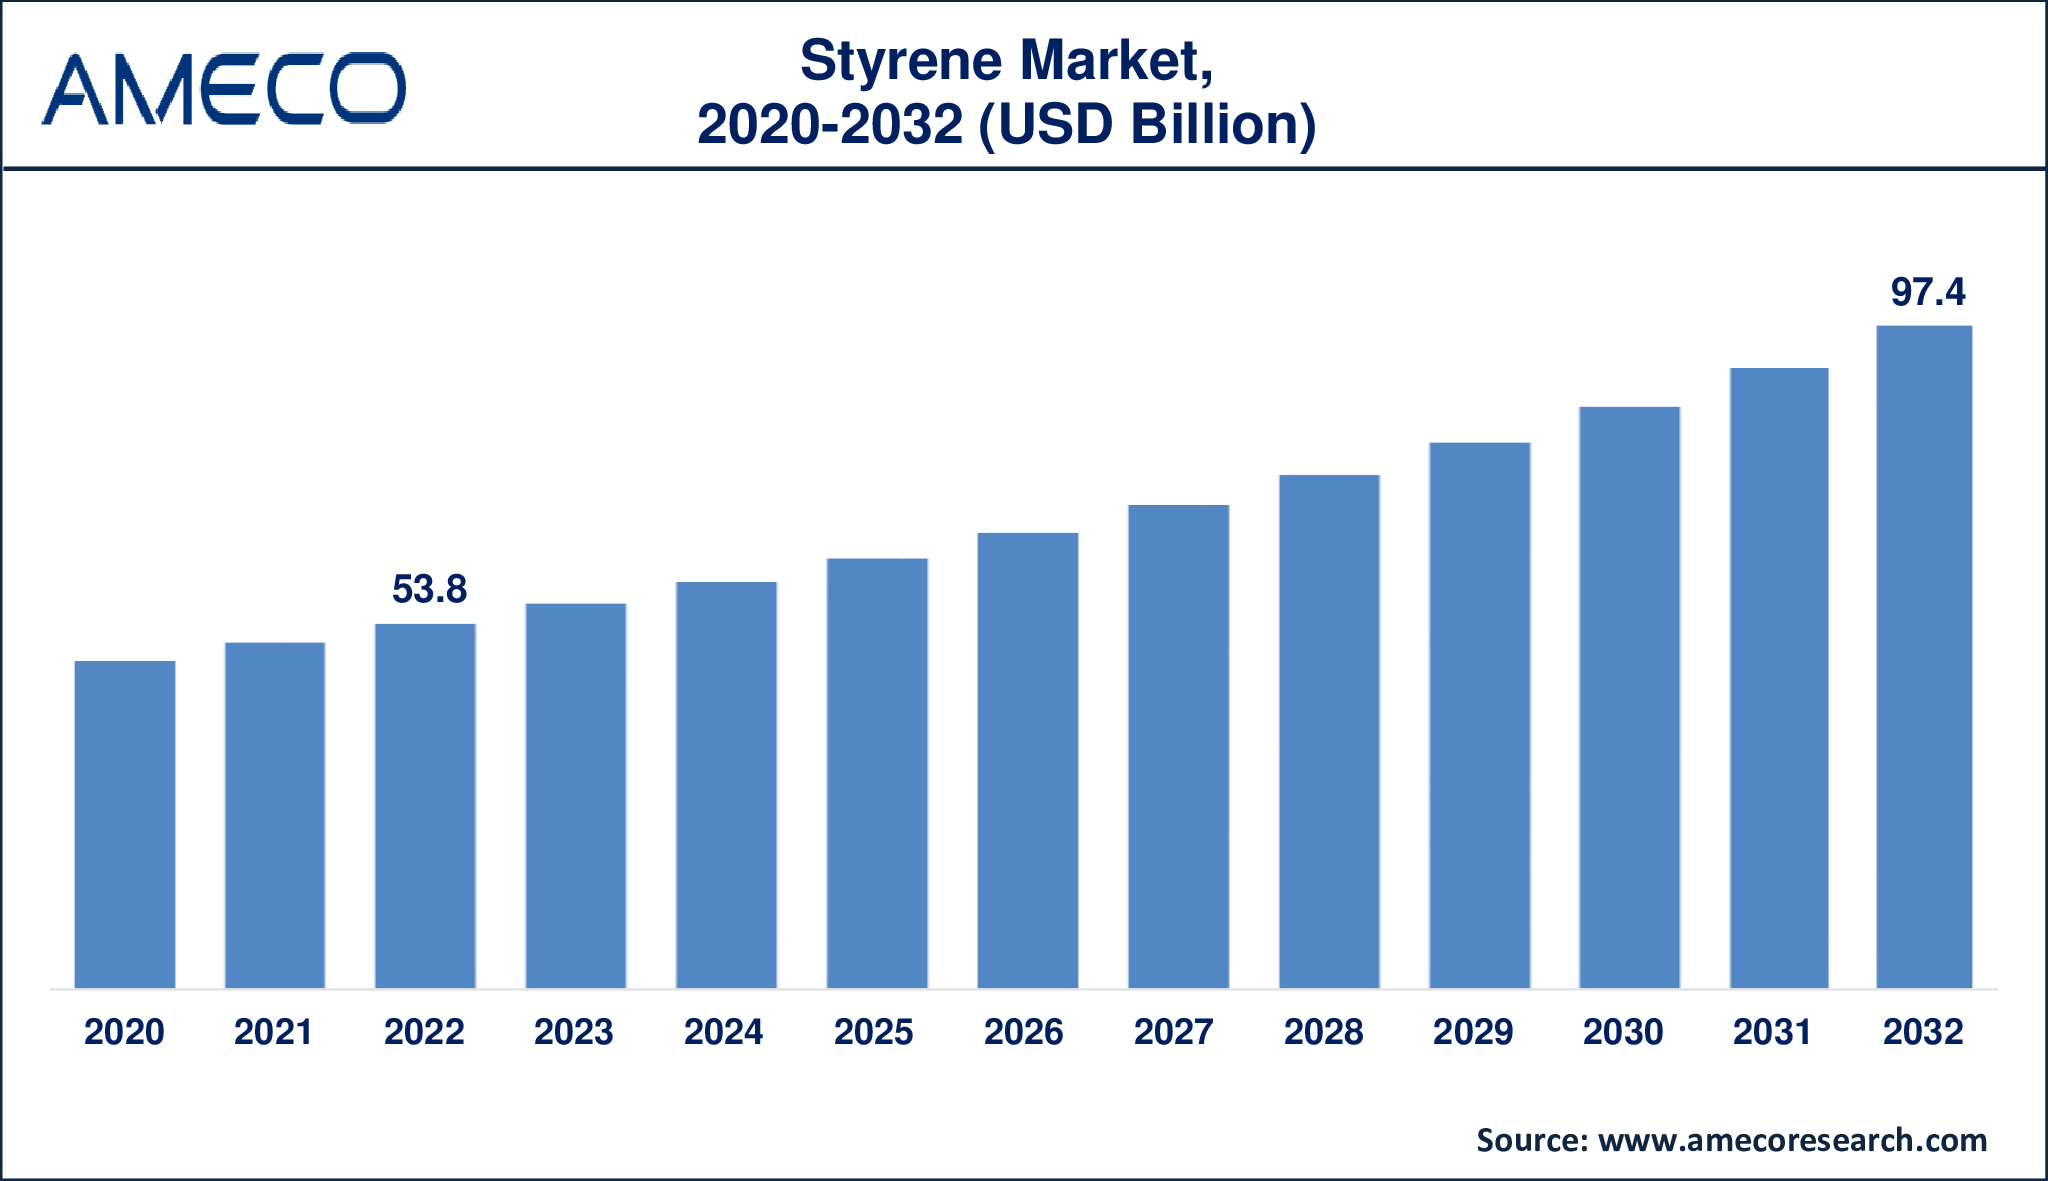 Styrene Market Dynamics